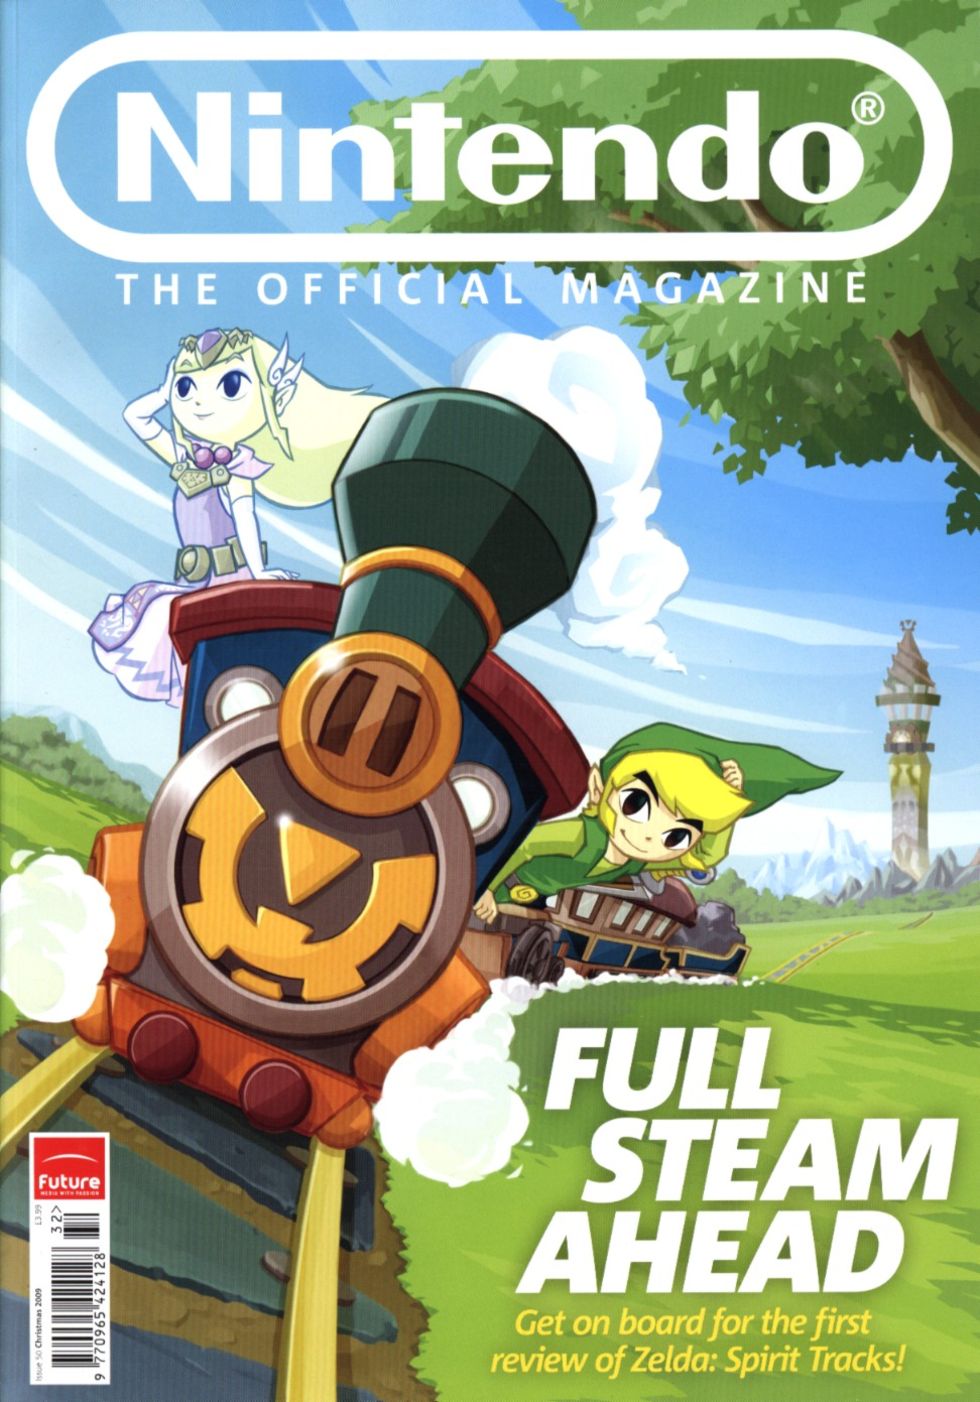 Bye bye Official Nintendo Magazine